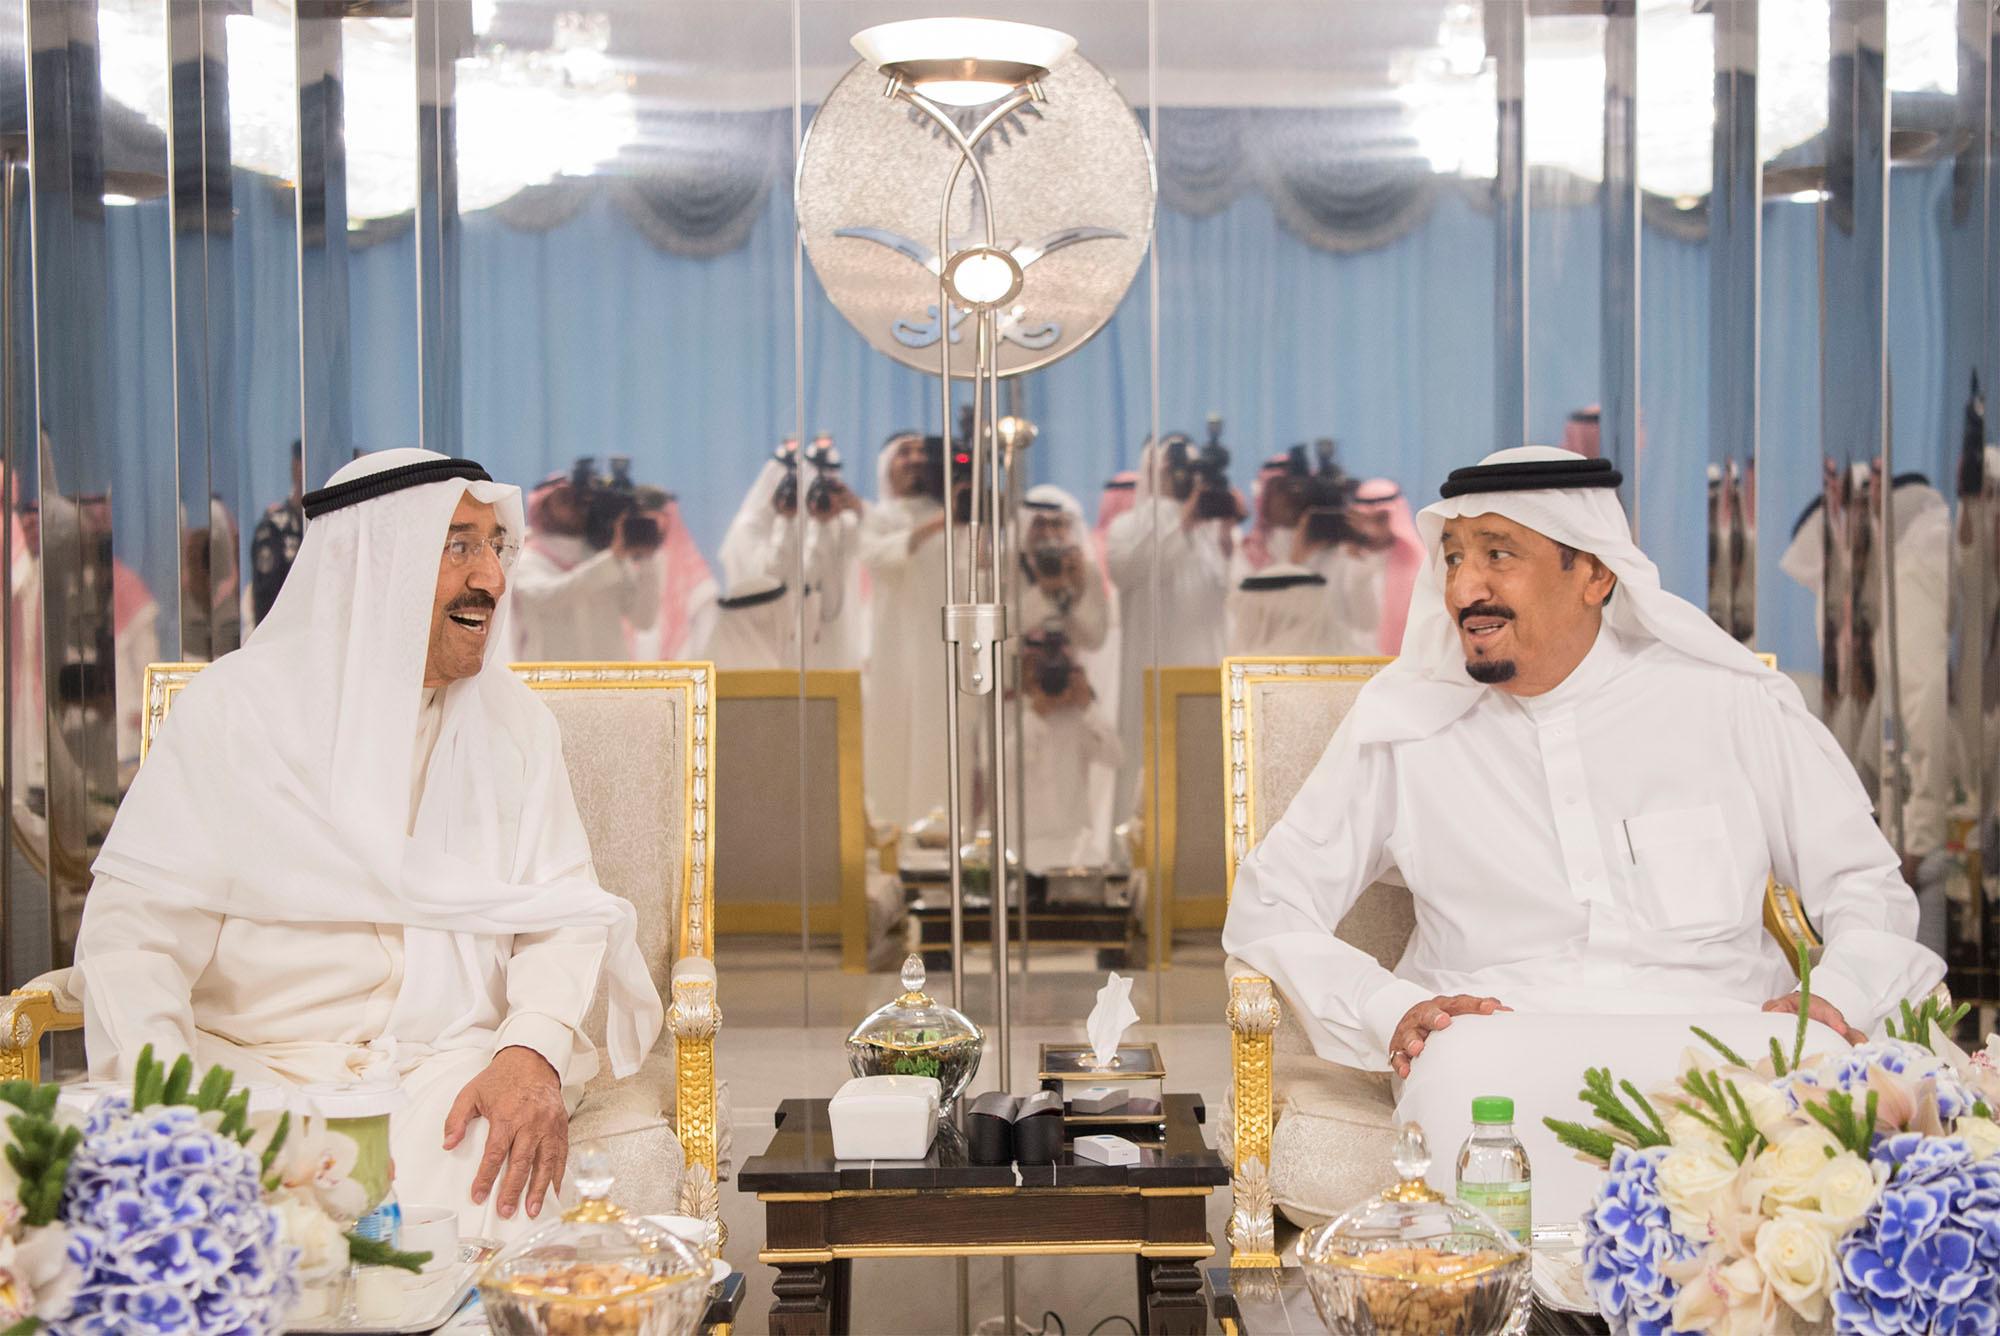 King of Saudi Arabia (right) meets with Emir of Kuwait in Jeddah, Saudi Arabia, in June 2017